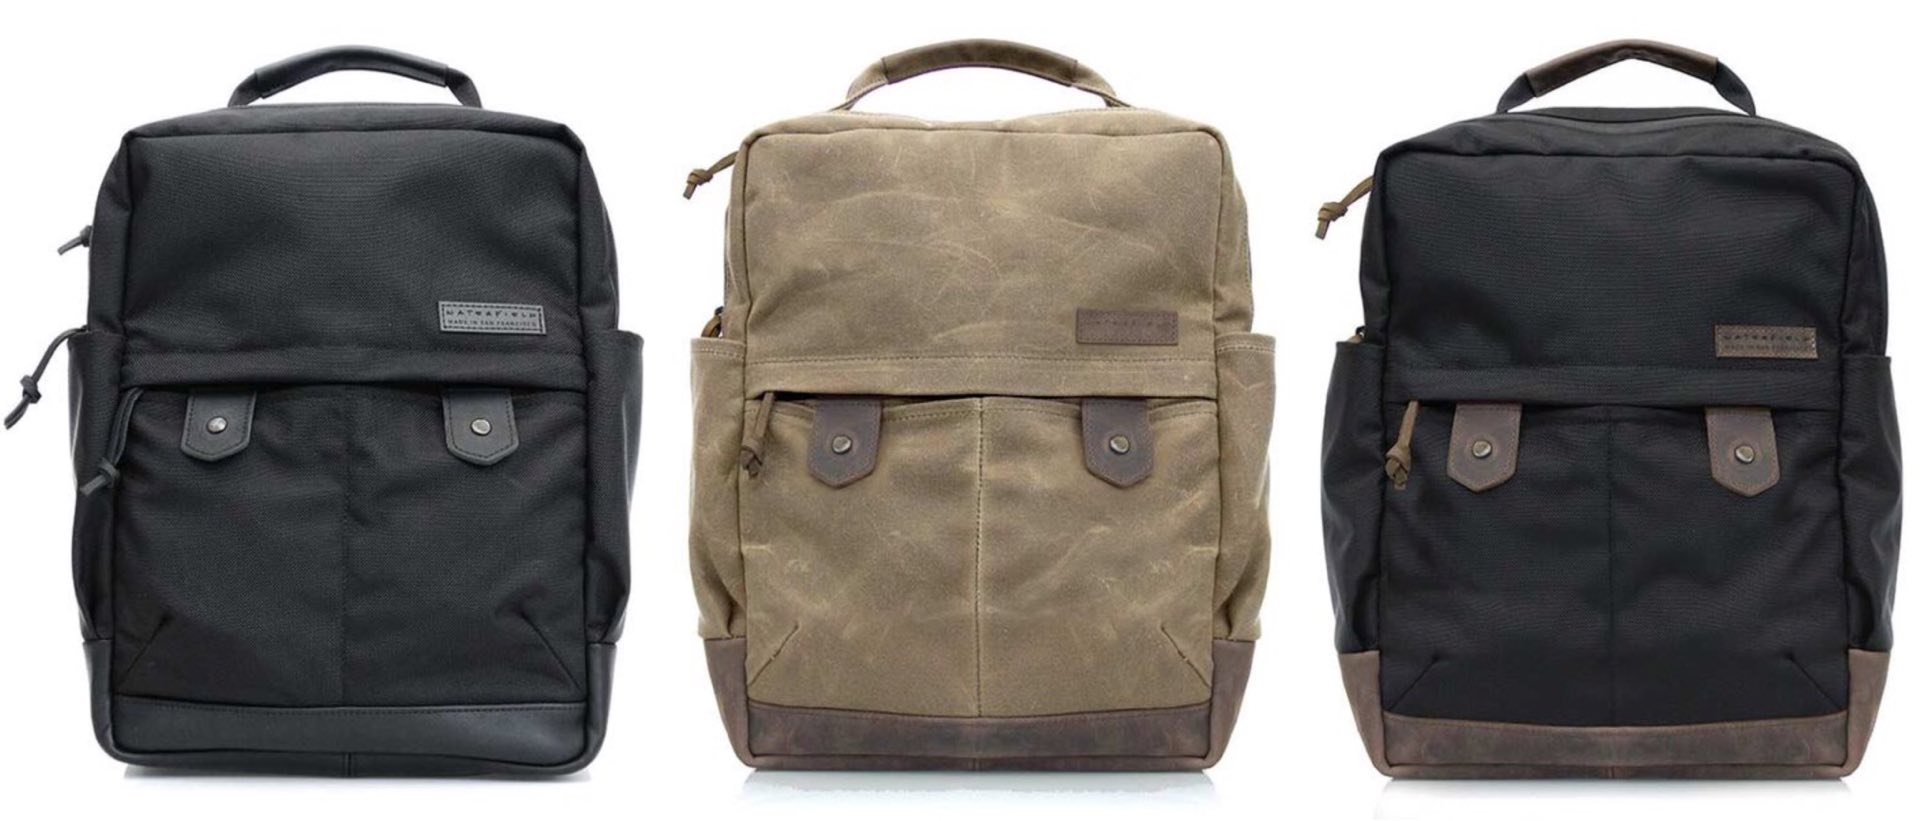 waterfield-designs-bolt-backpack